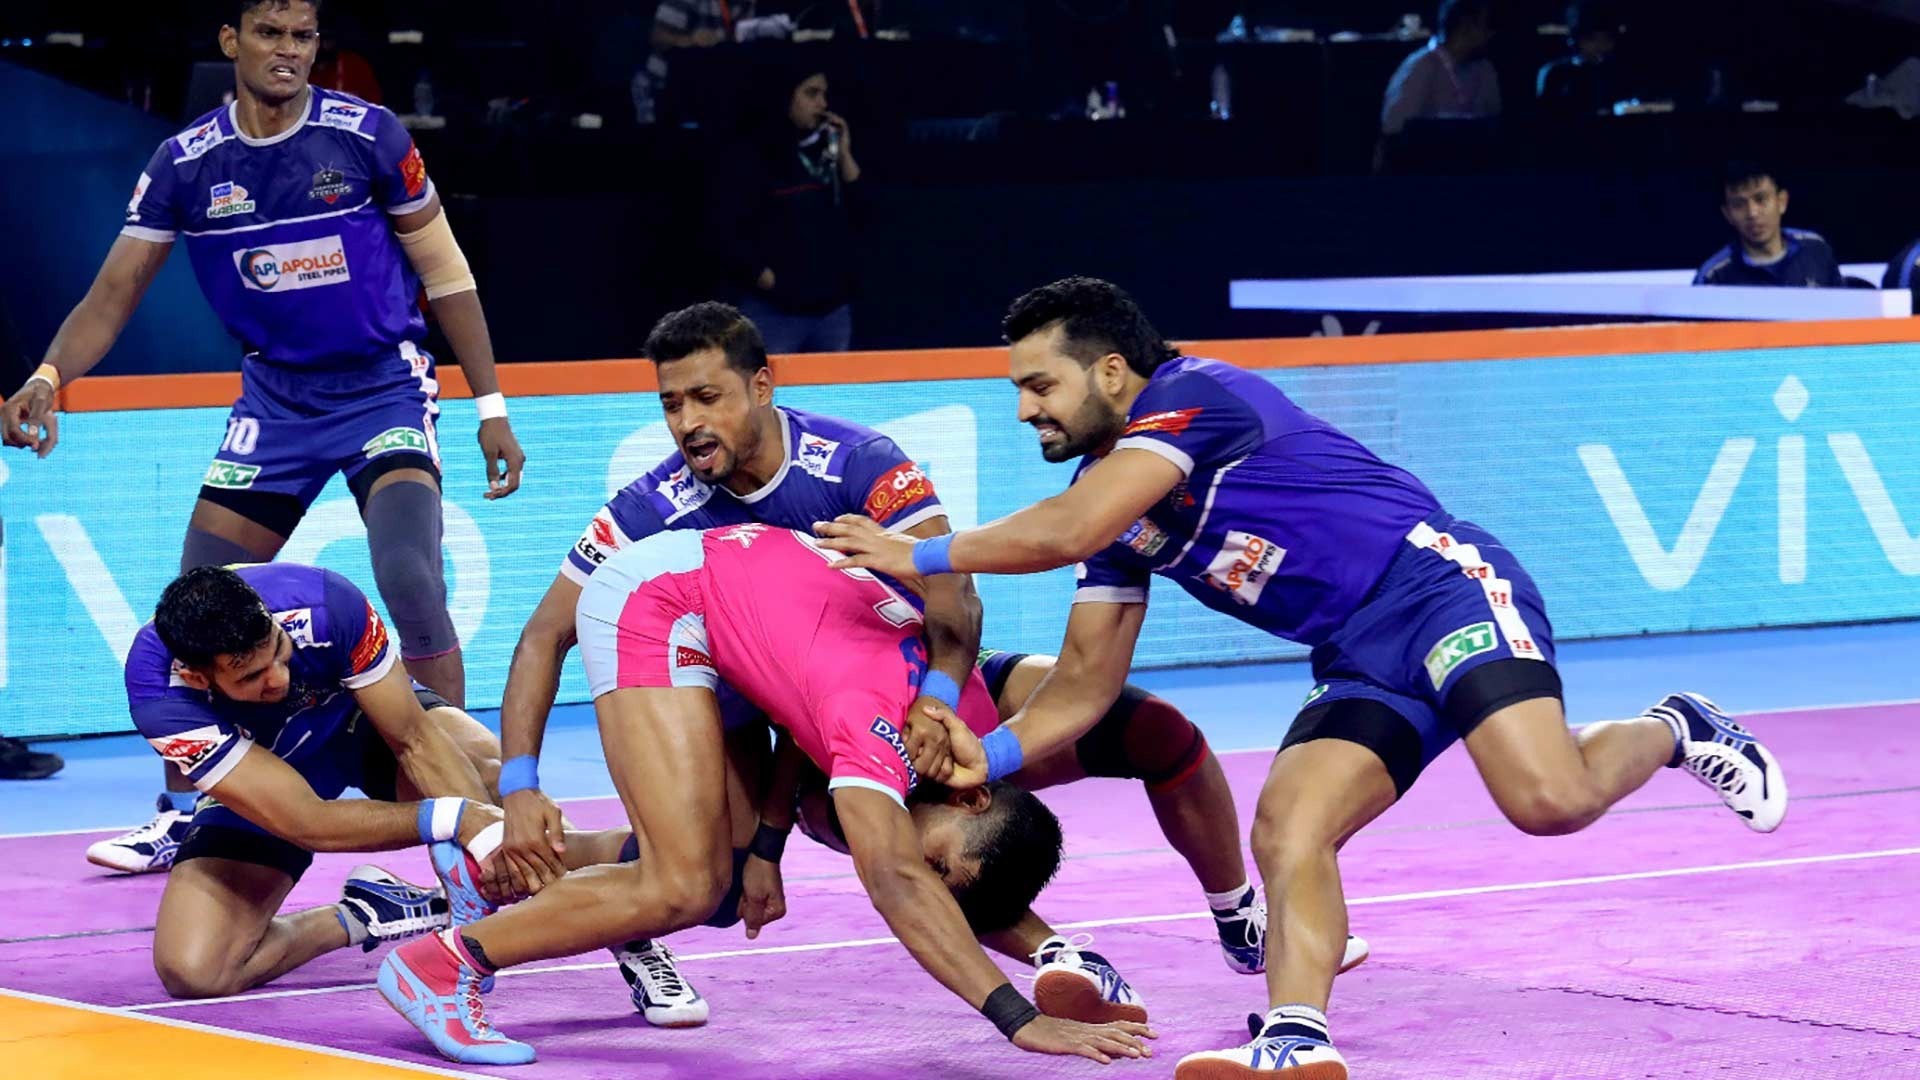 PKL 2019 | Despite Sunil’s good performance, defence didn’t deliver as unit, explains Rakesh Kumar